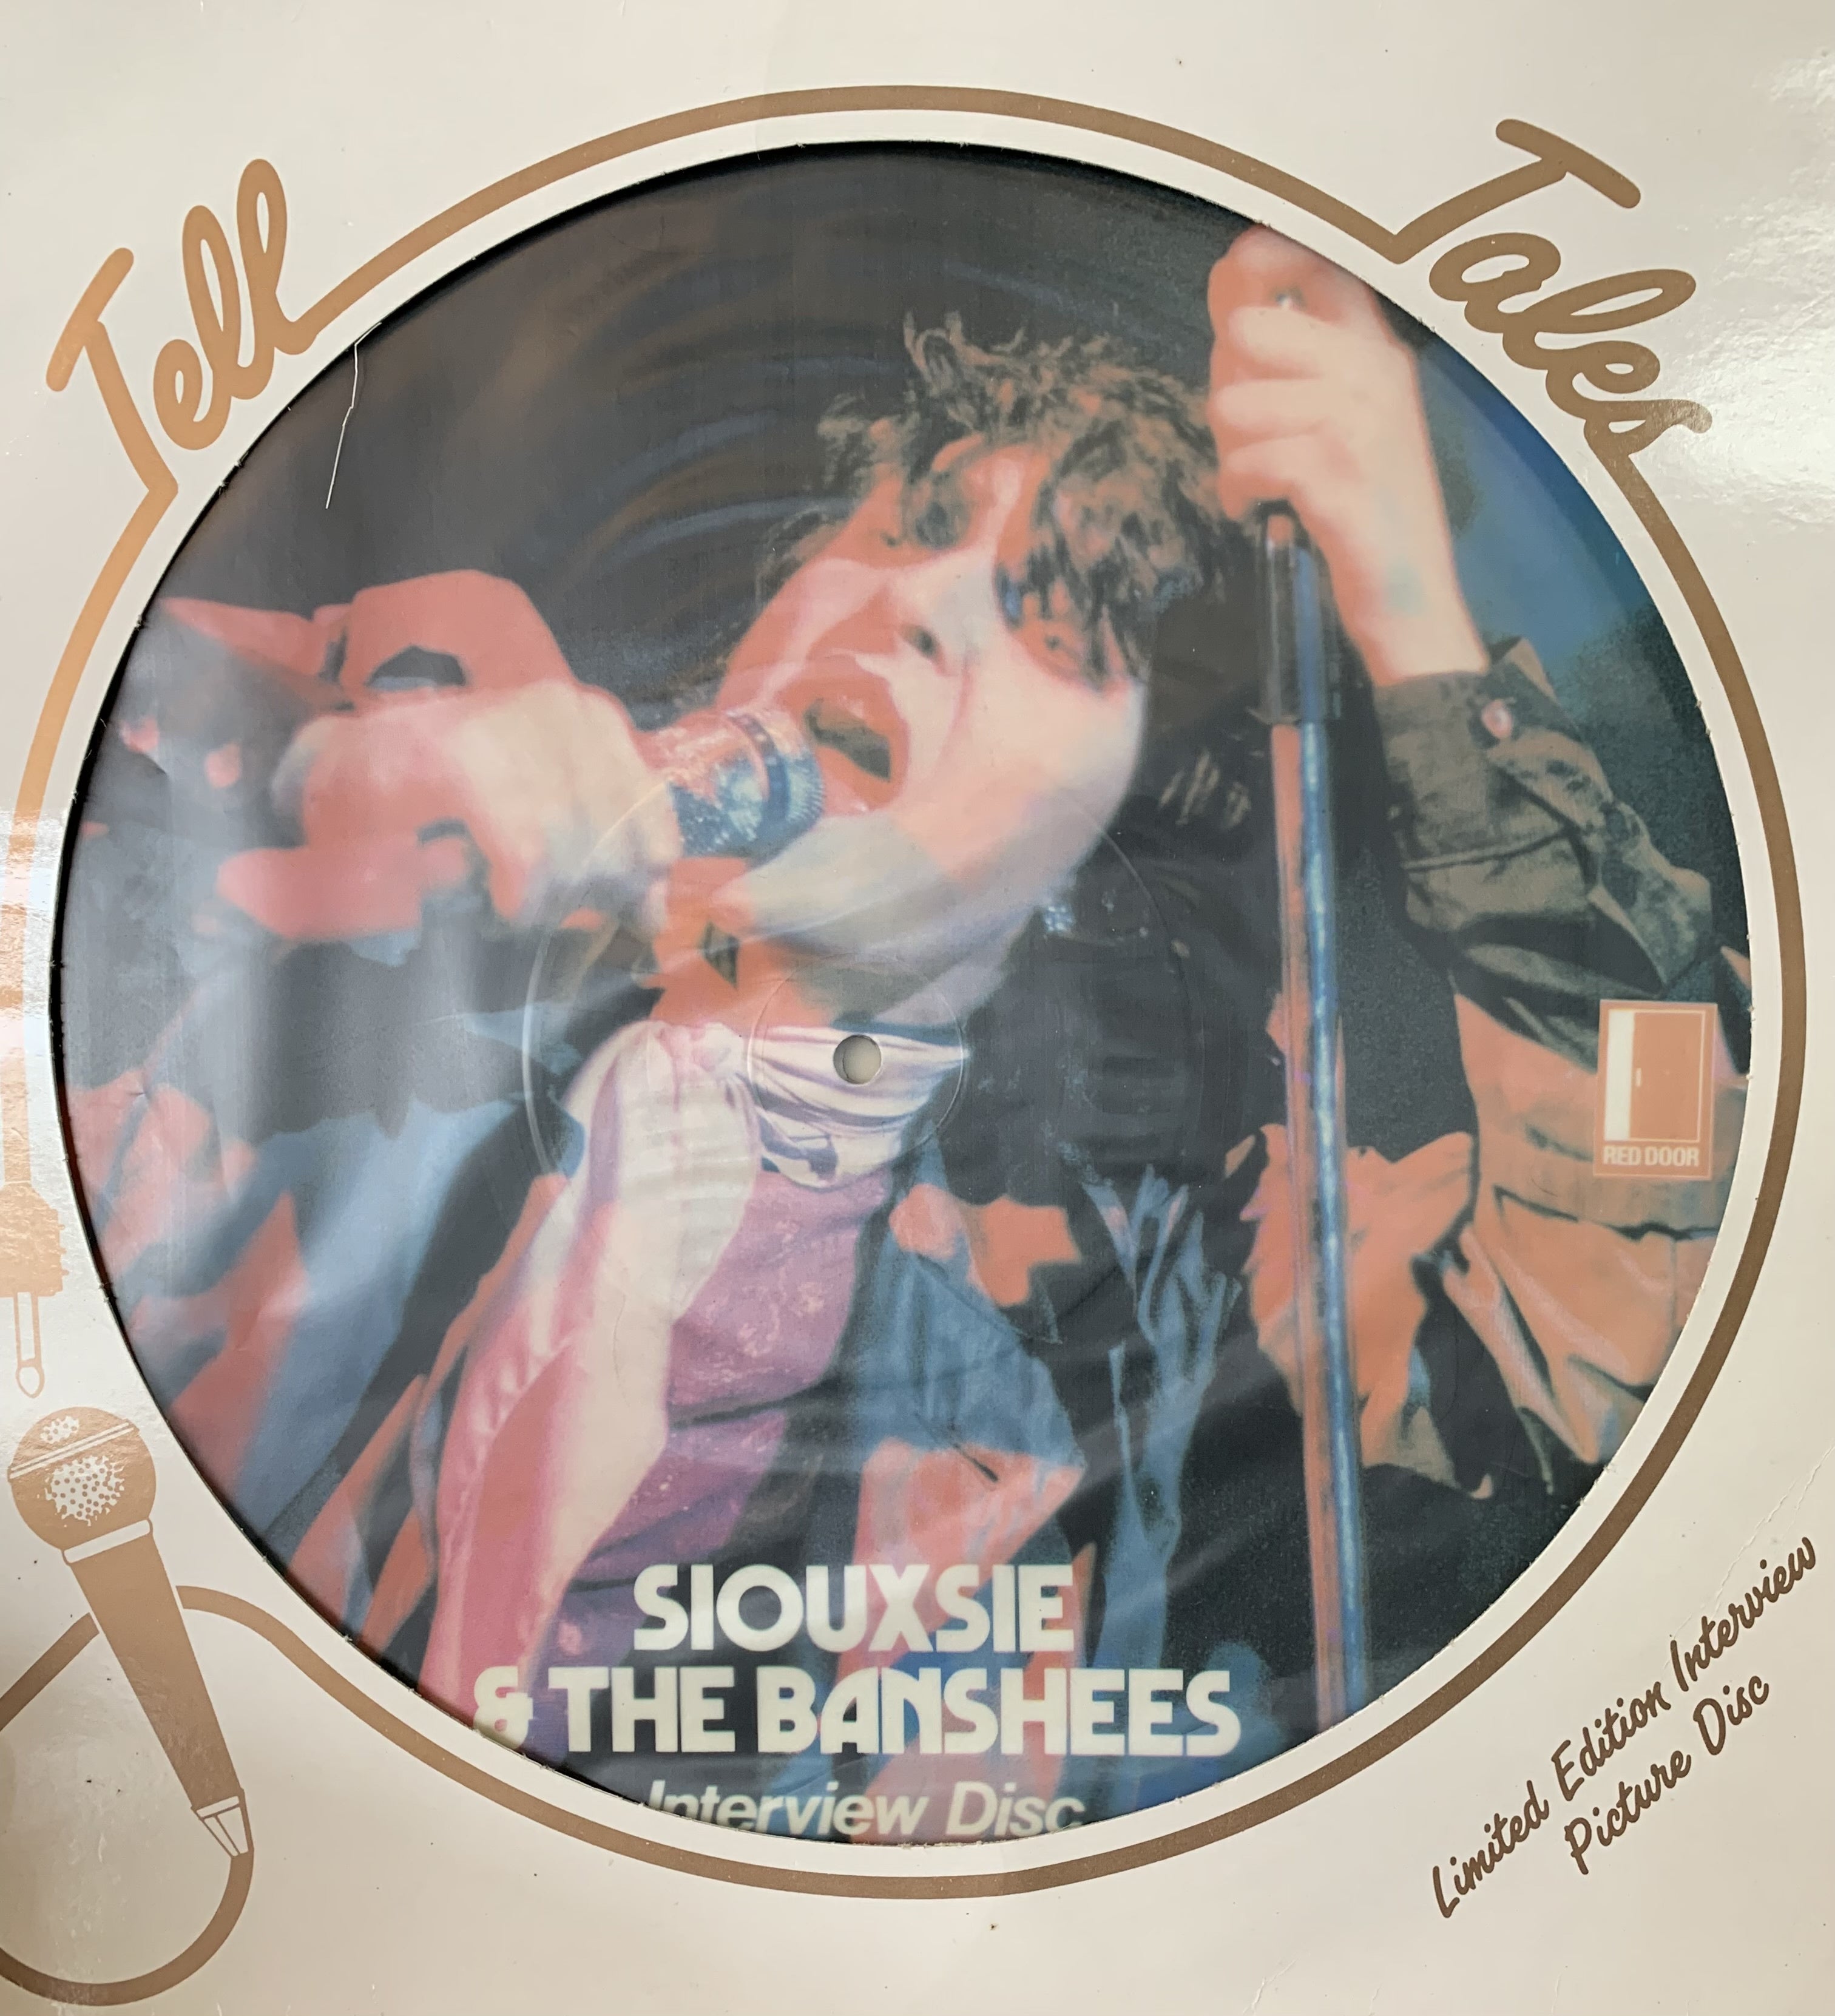 SIOUXSIE & THE BANSHEES-INTERVIEW DISC LP NM